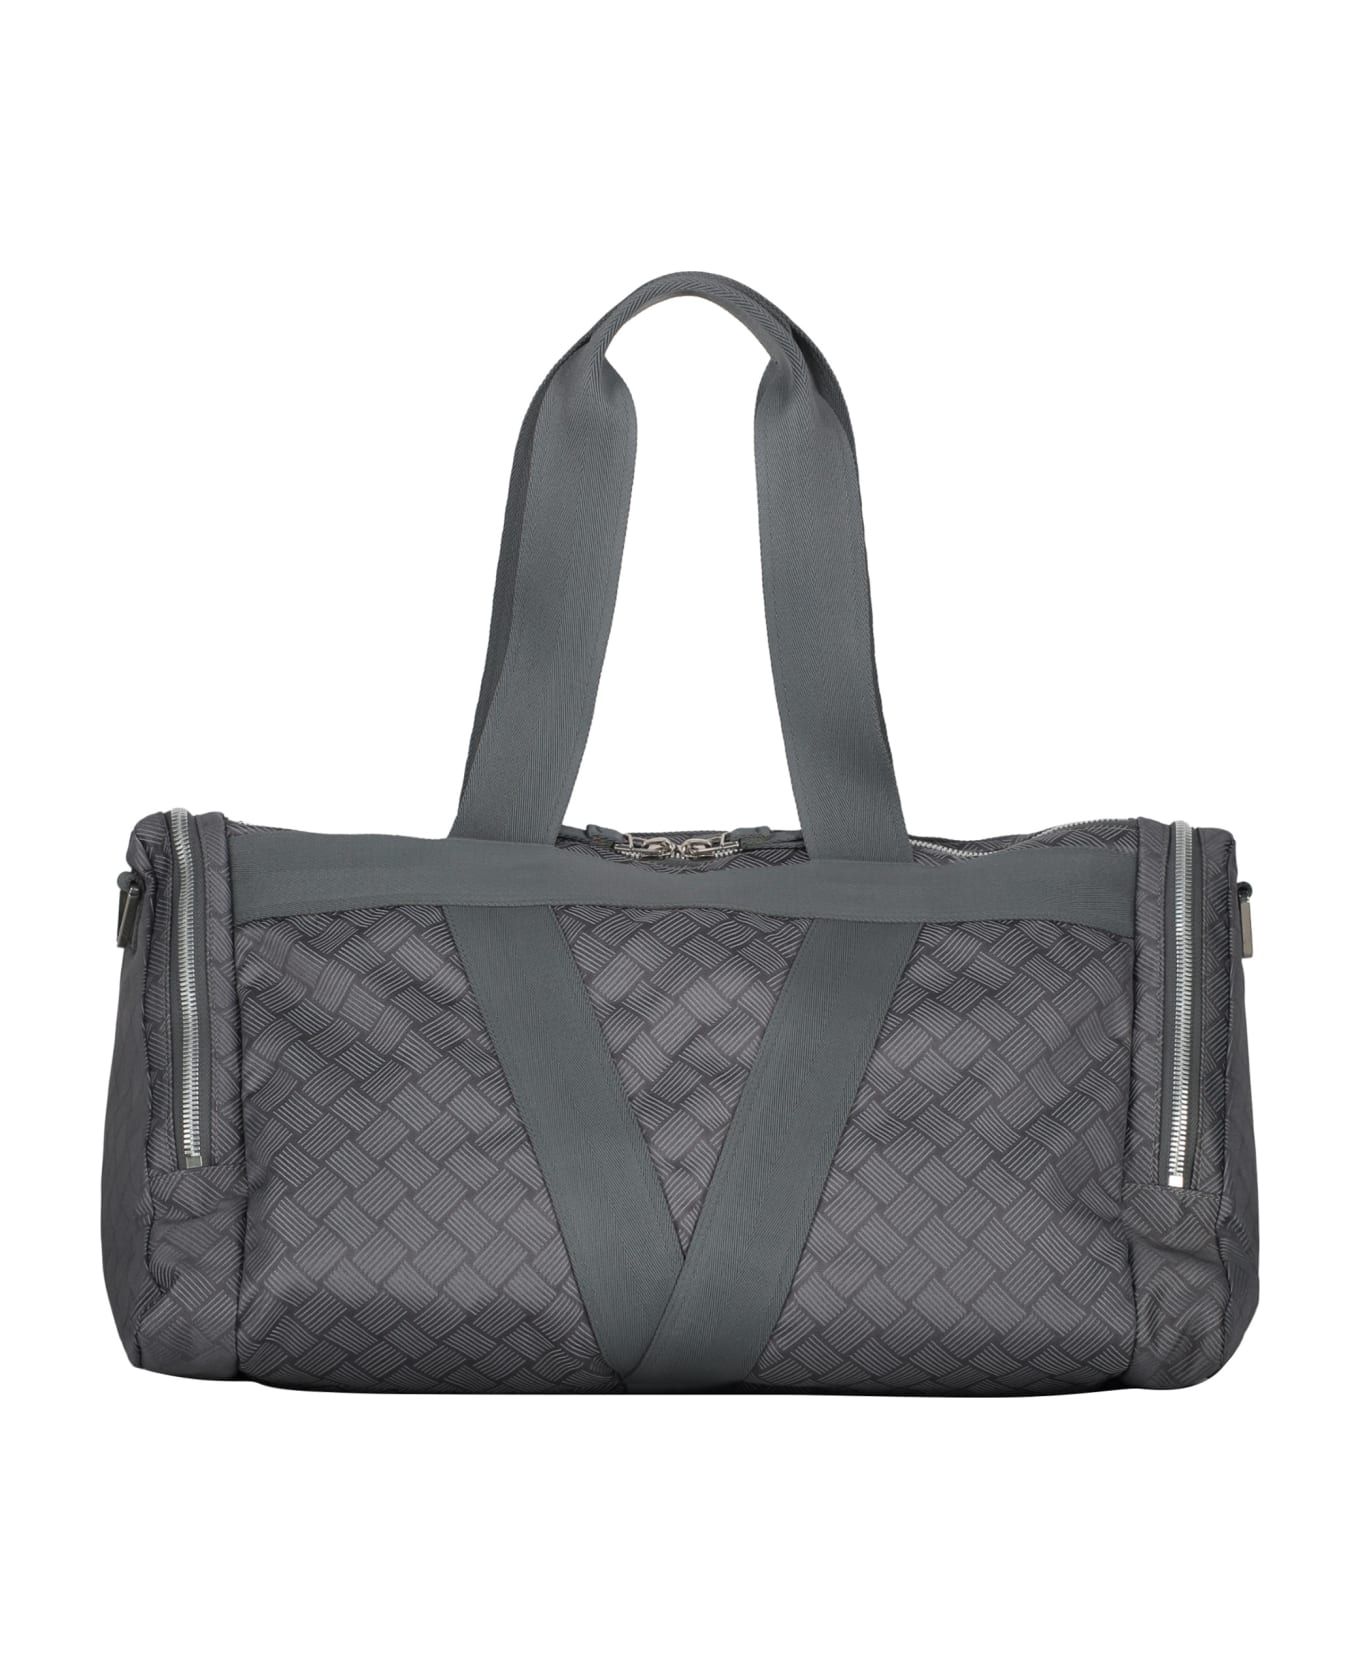 Bottega Veneta Travel Bag - grey トラベルバッグ